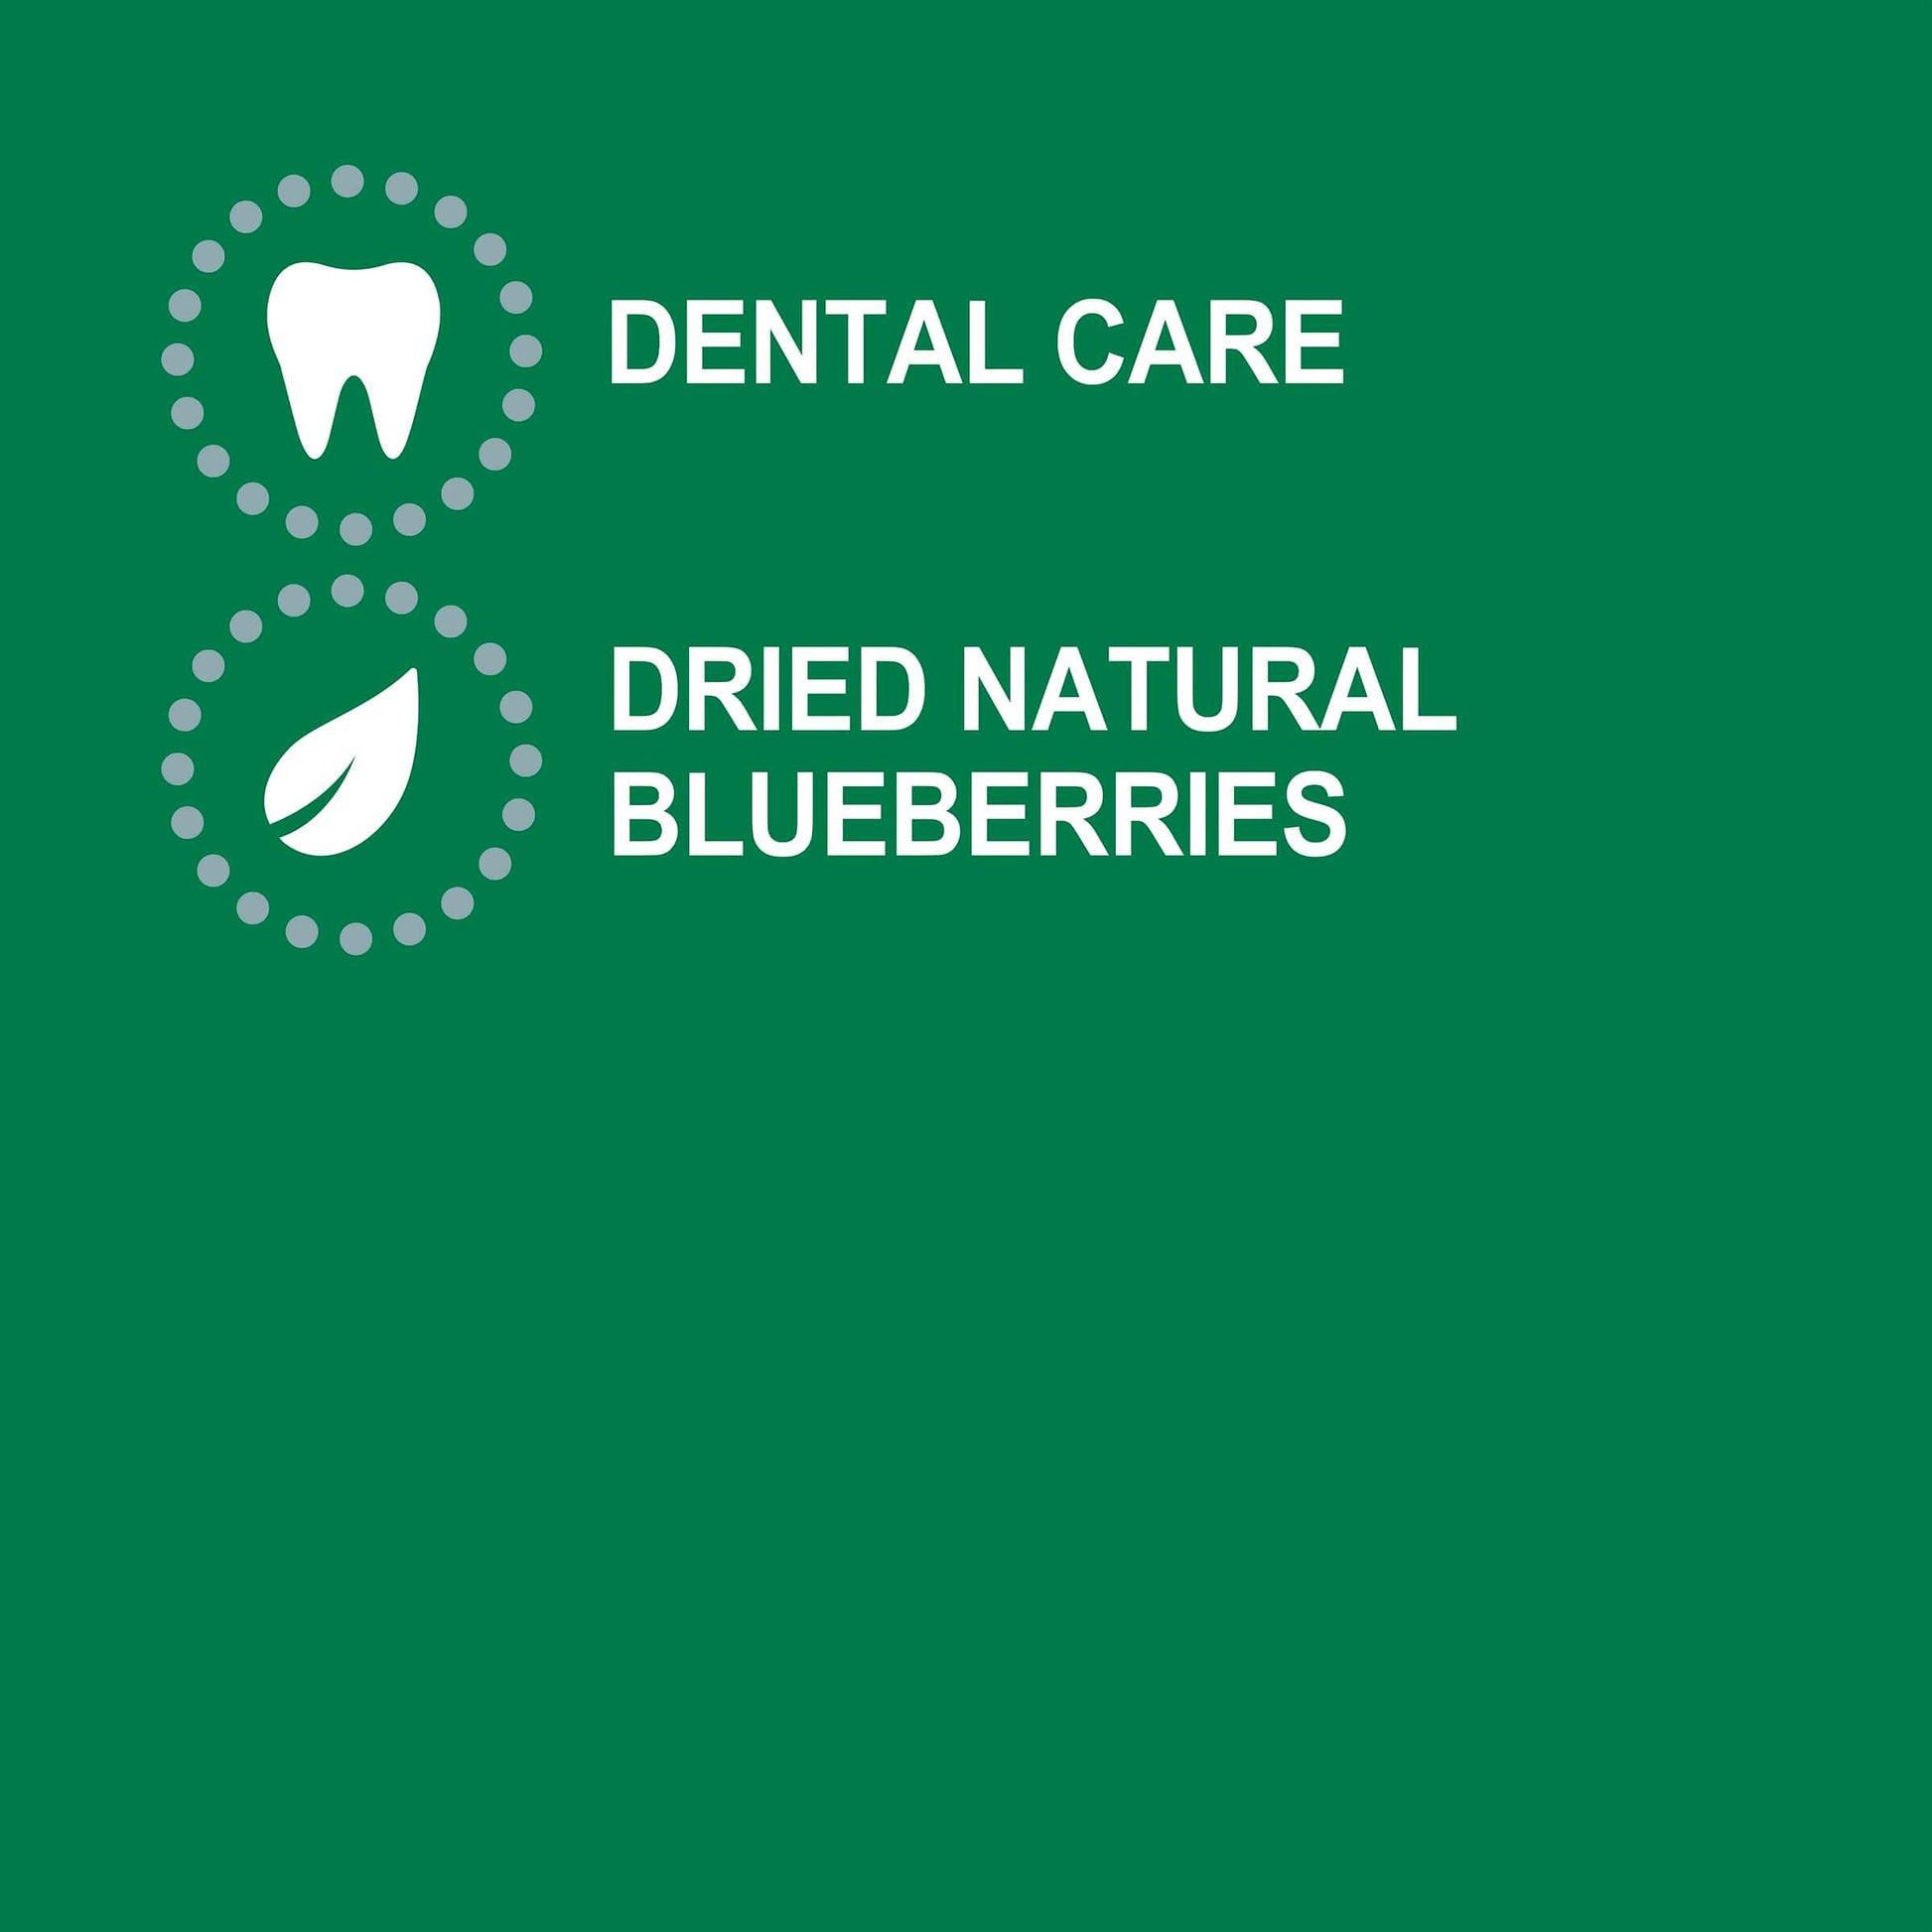 Greenies Blueberry Regular Dental Chews Dog Treats 340g (122311000245) [default_color]